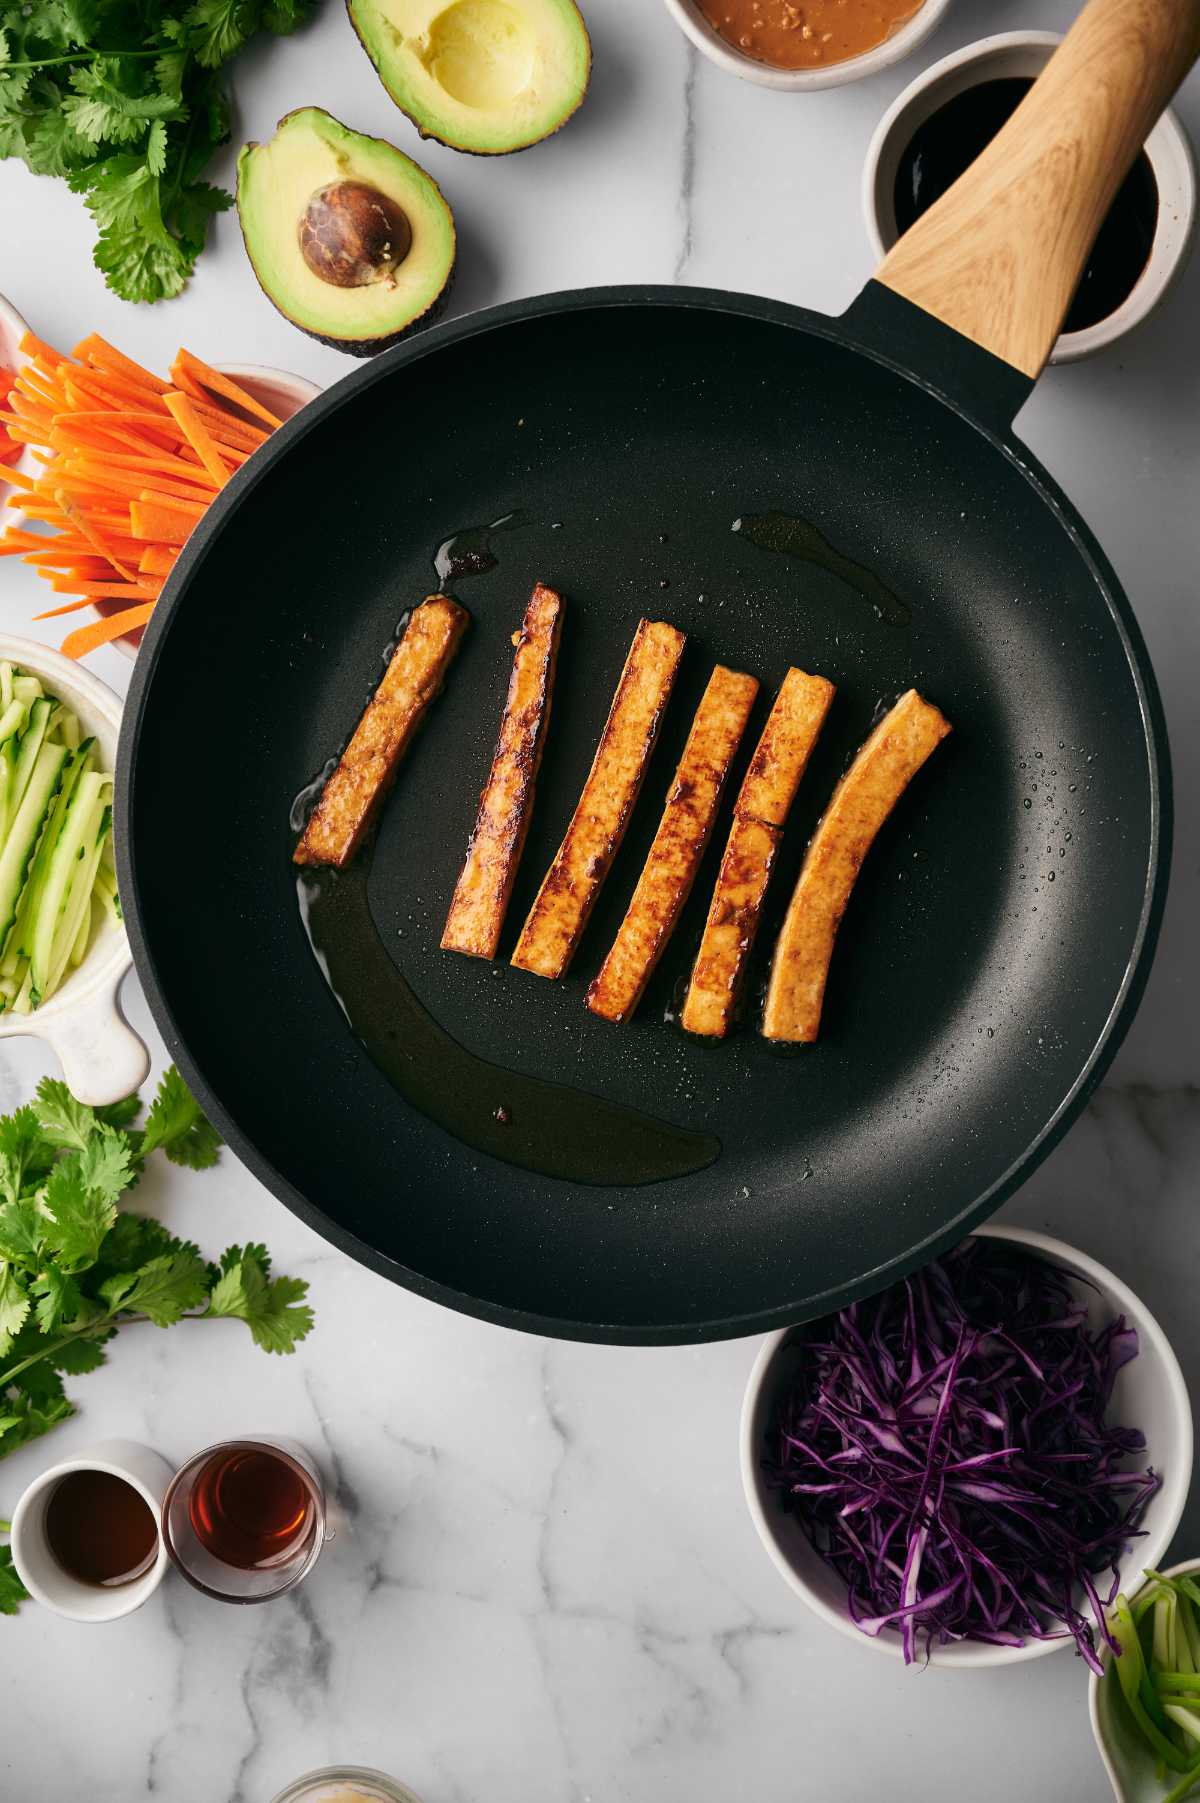 Frying Tofu in a pan next to veggies